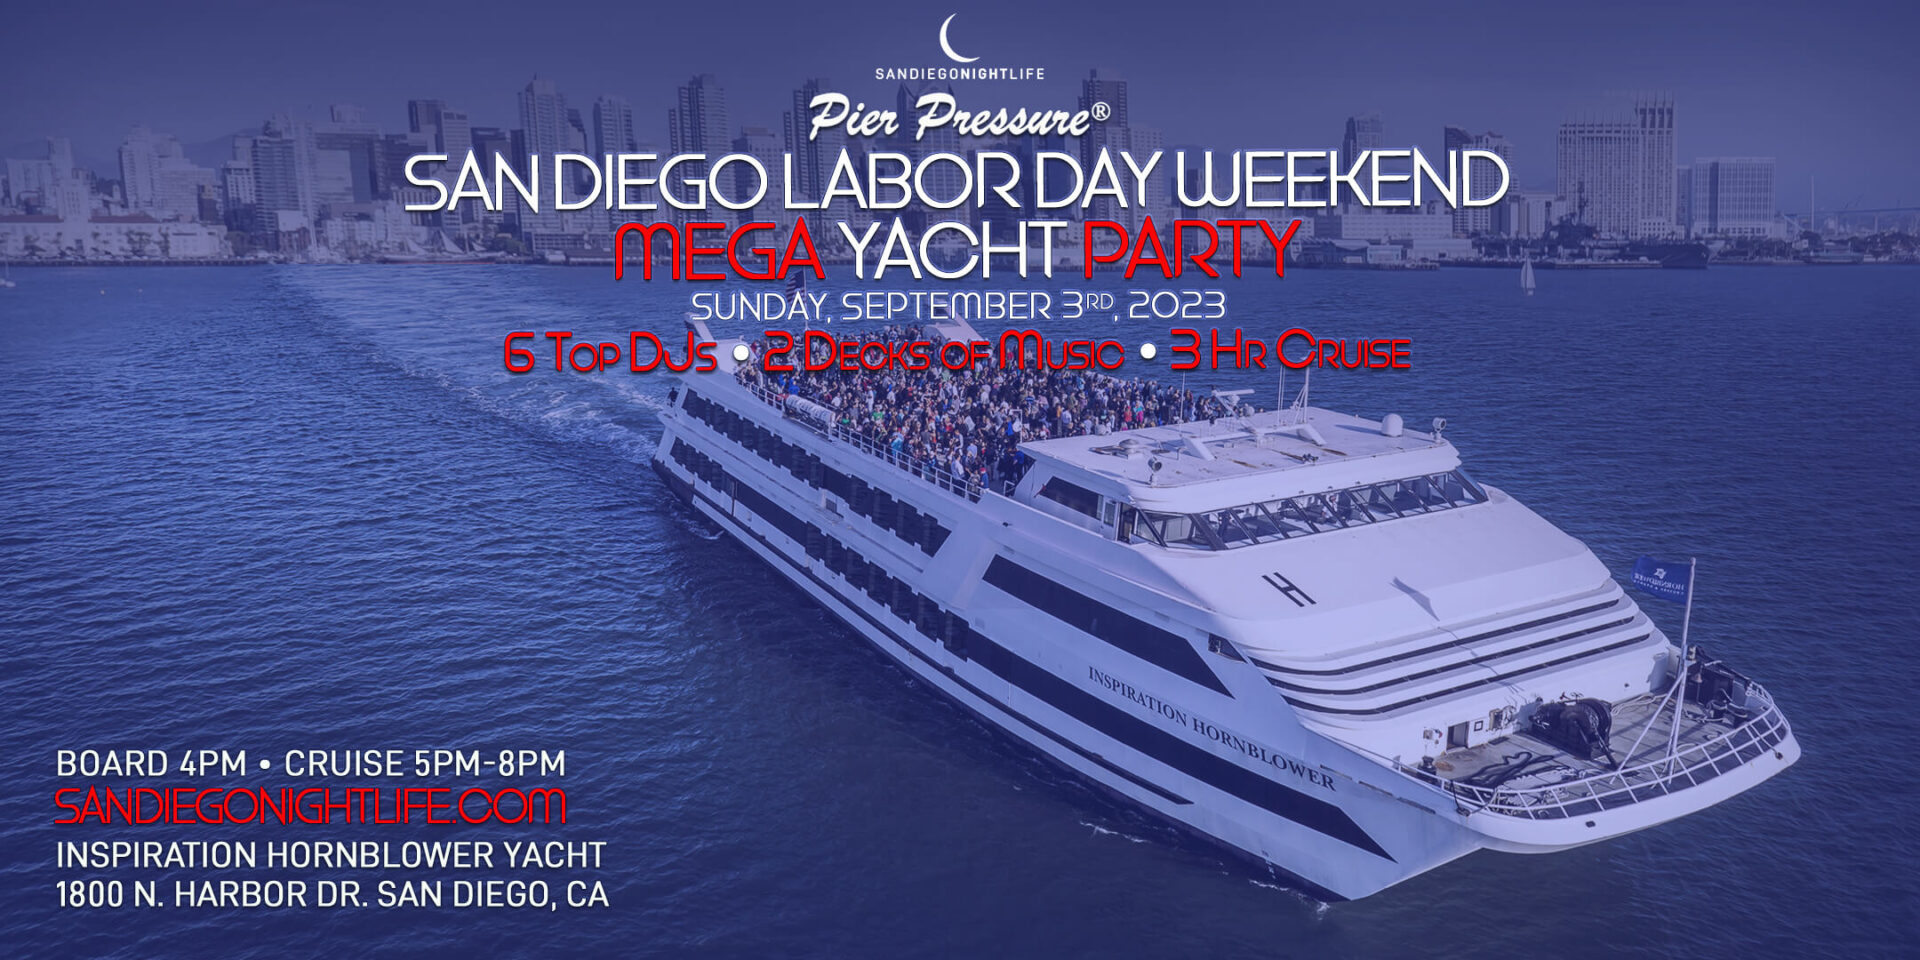 San Diego Labor Day Weekend Pier Pressure Mega Yacht Party San Diego